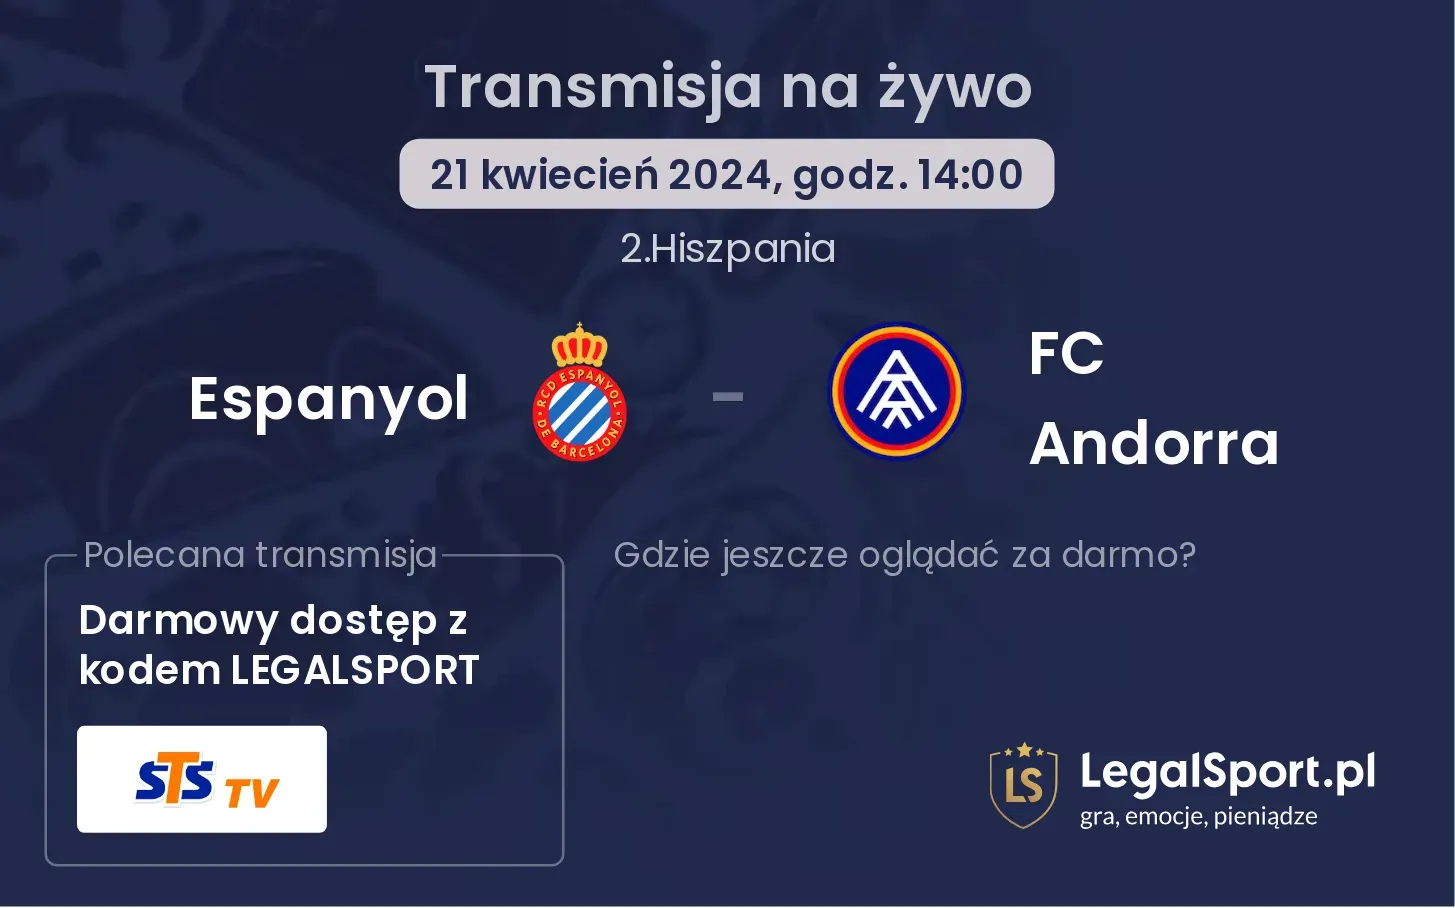 Espanyol - FC Andorra transmisja na żywo